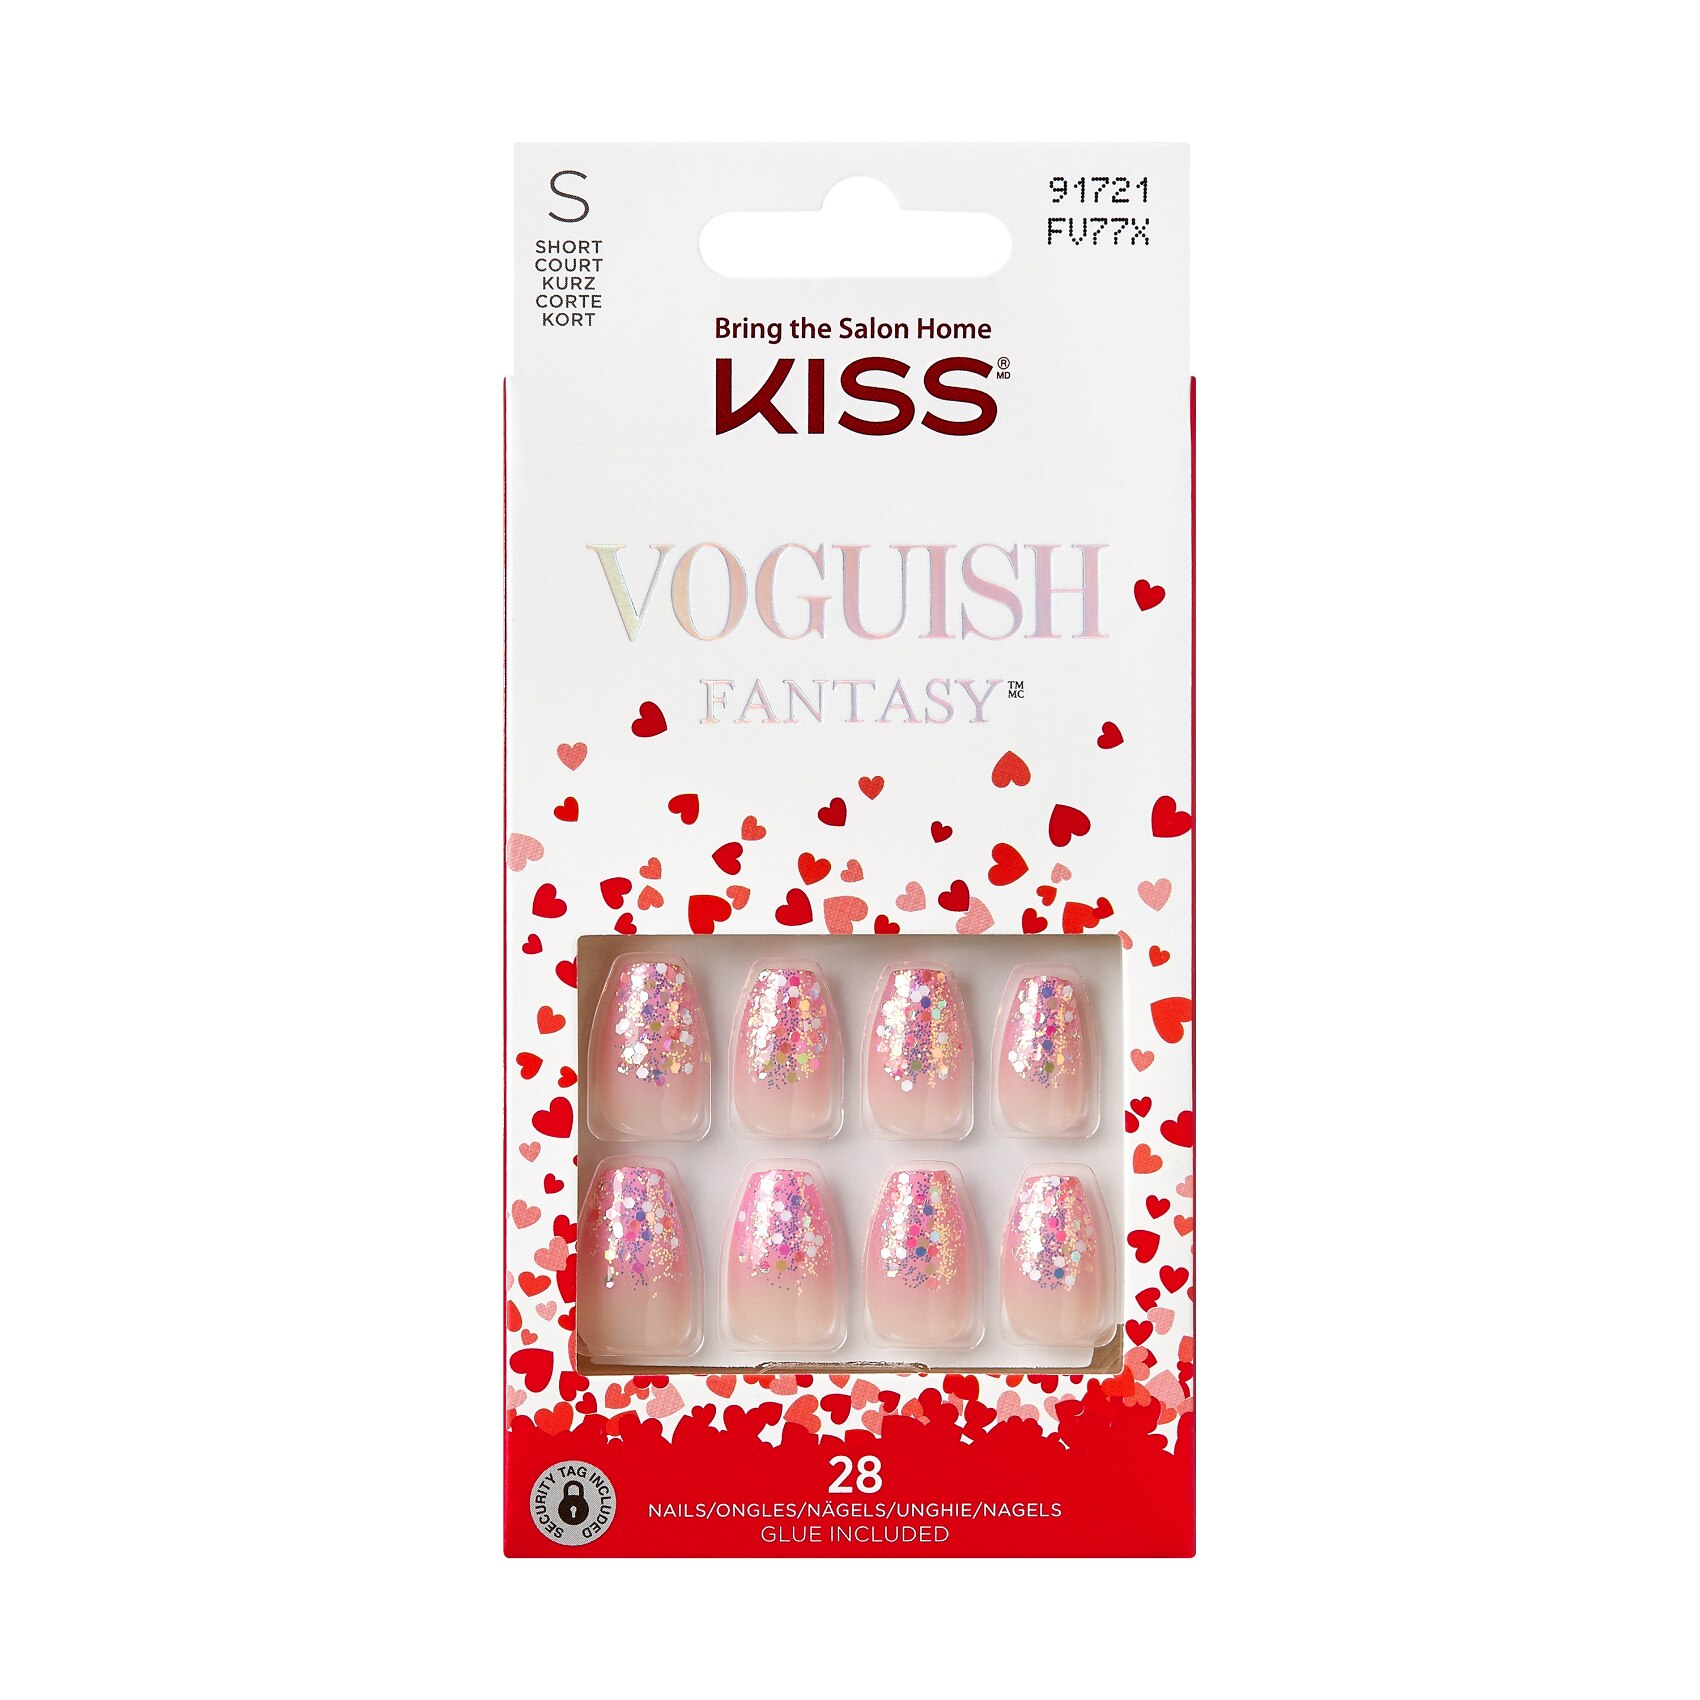 KISS Voguish Fantasy Nails, Date Night , CVS